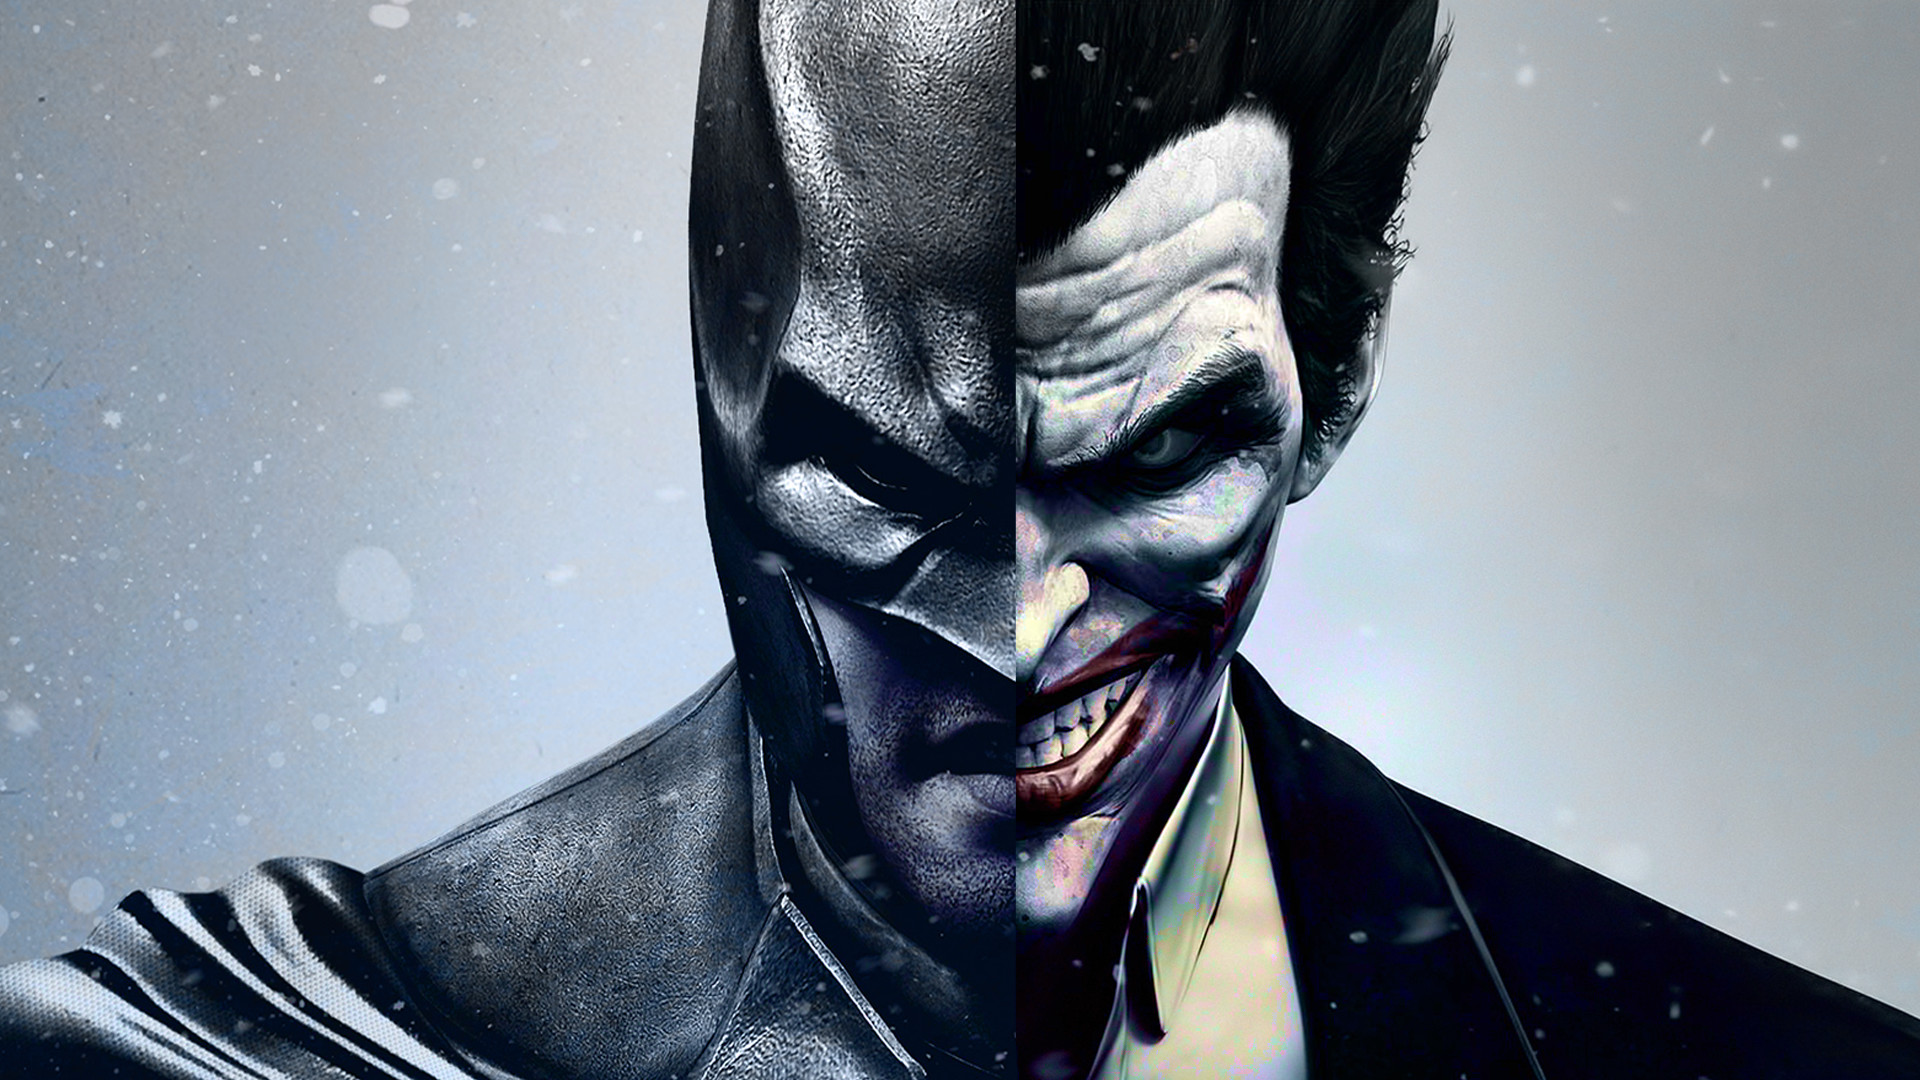  download Batman vs Joker Wallpaper 73 images [1920x1080] for 1920x1080